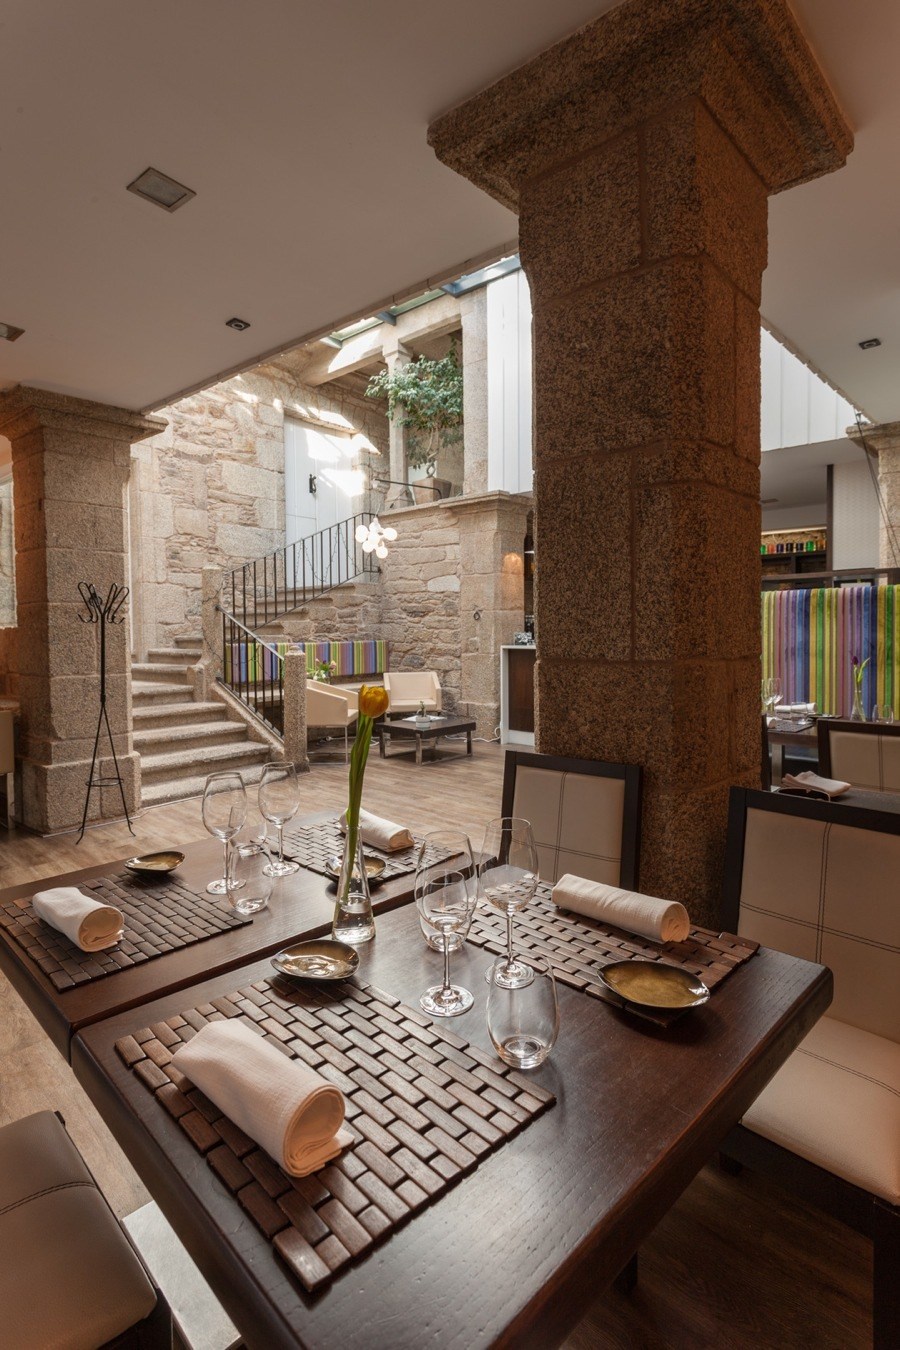 imagen 3 de A Tafona de Santiago de Compostela, una casa de comidas que promete estrellas.